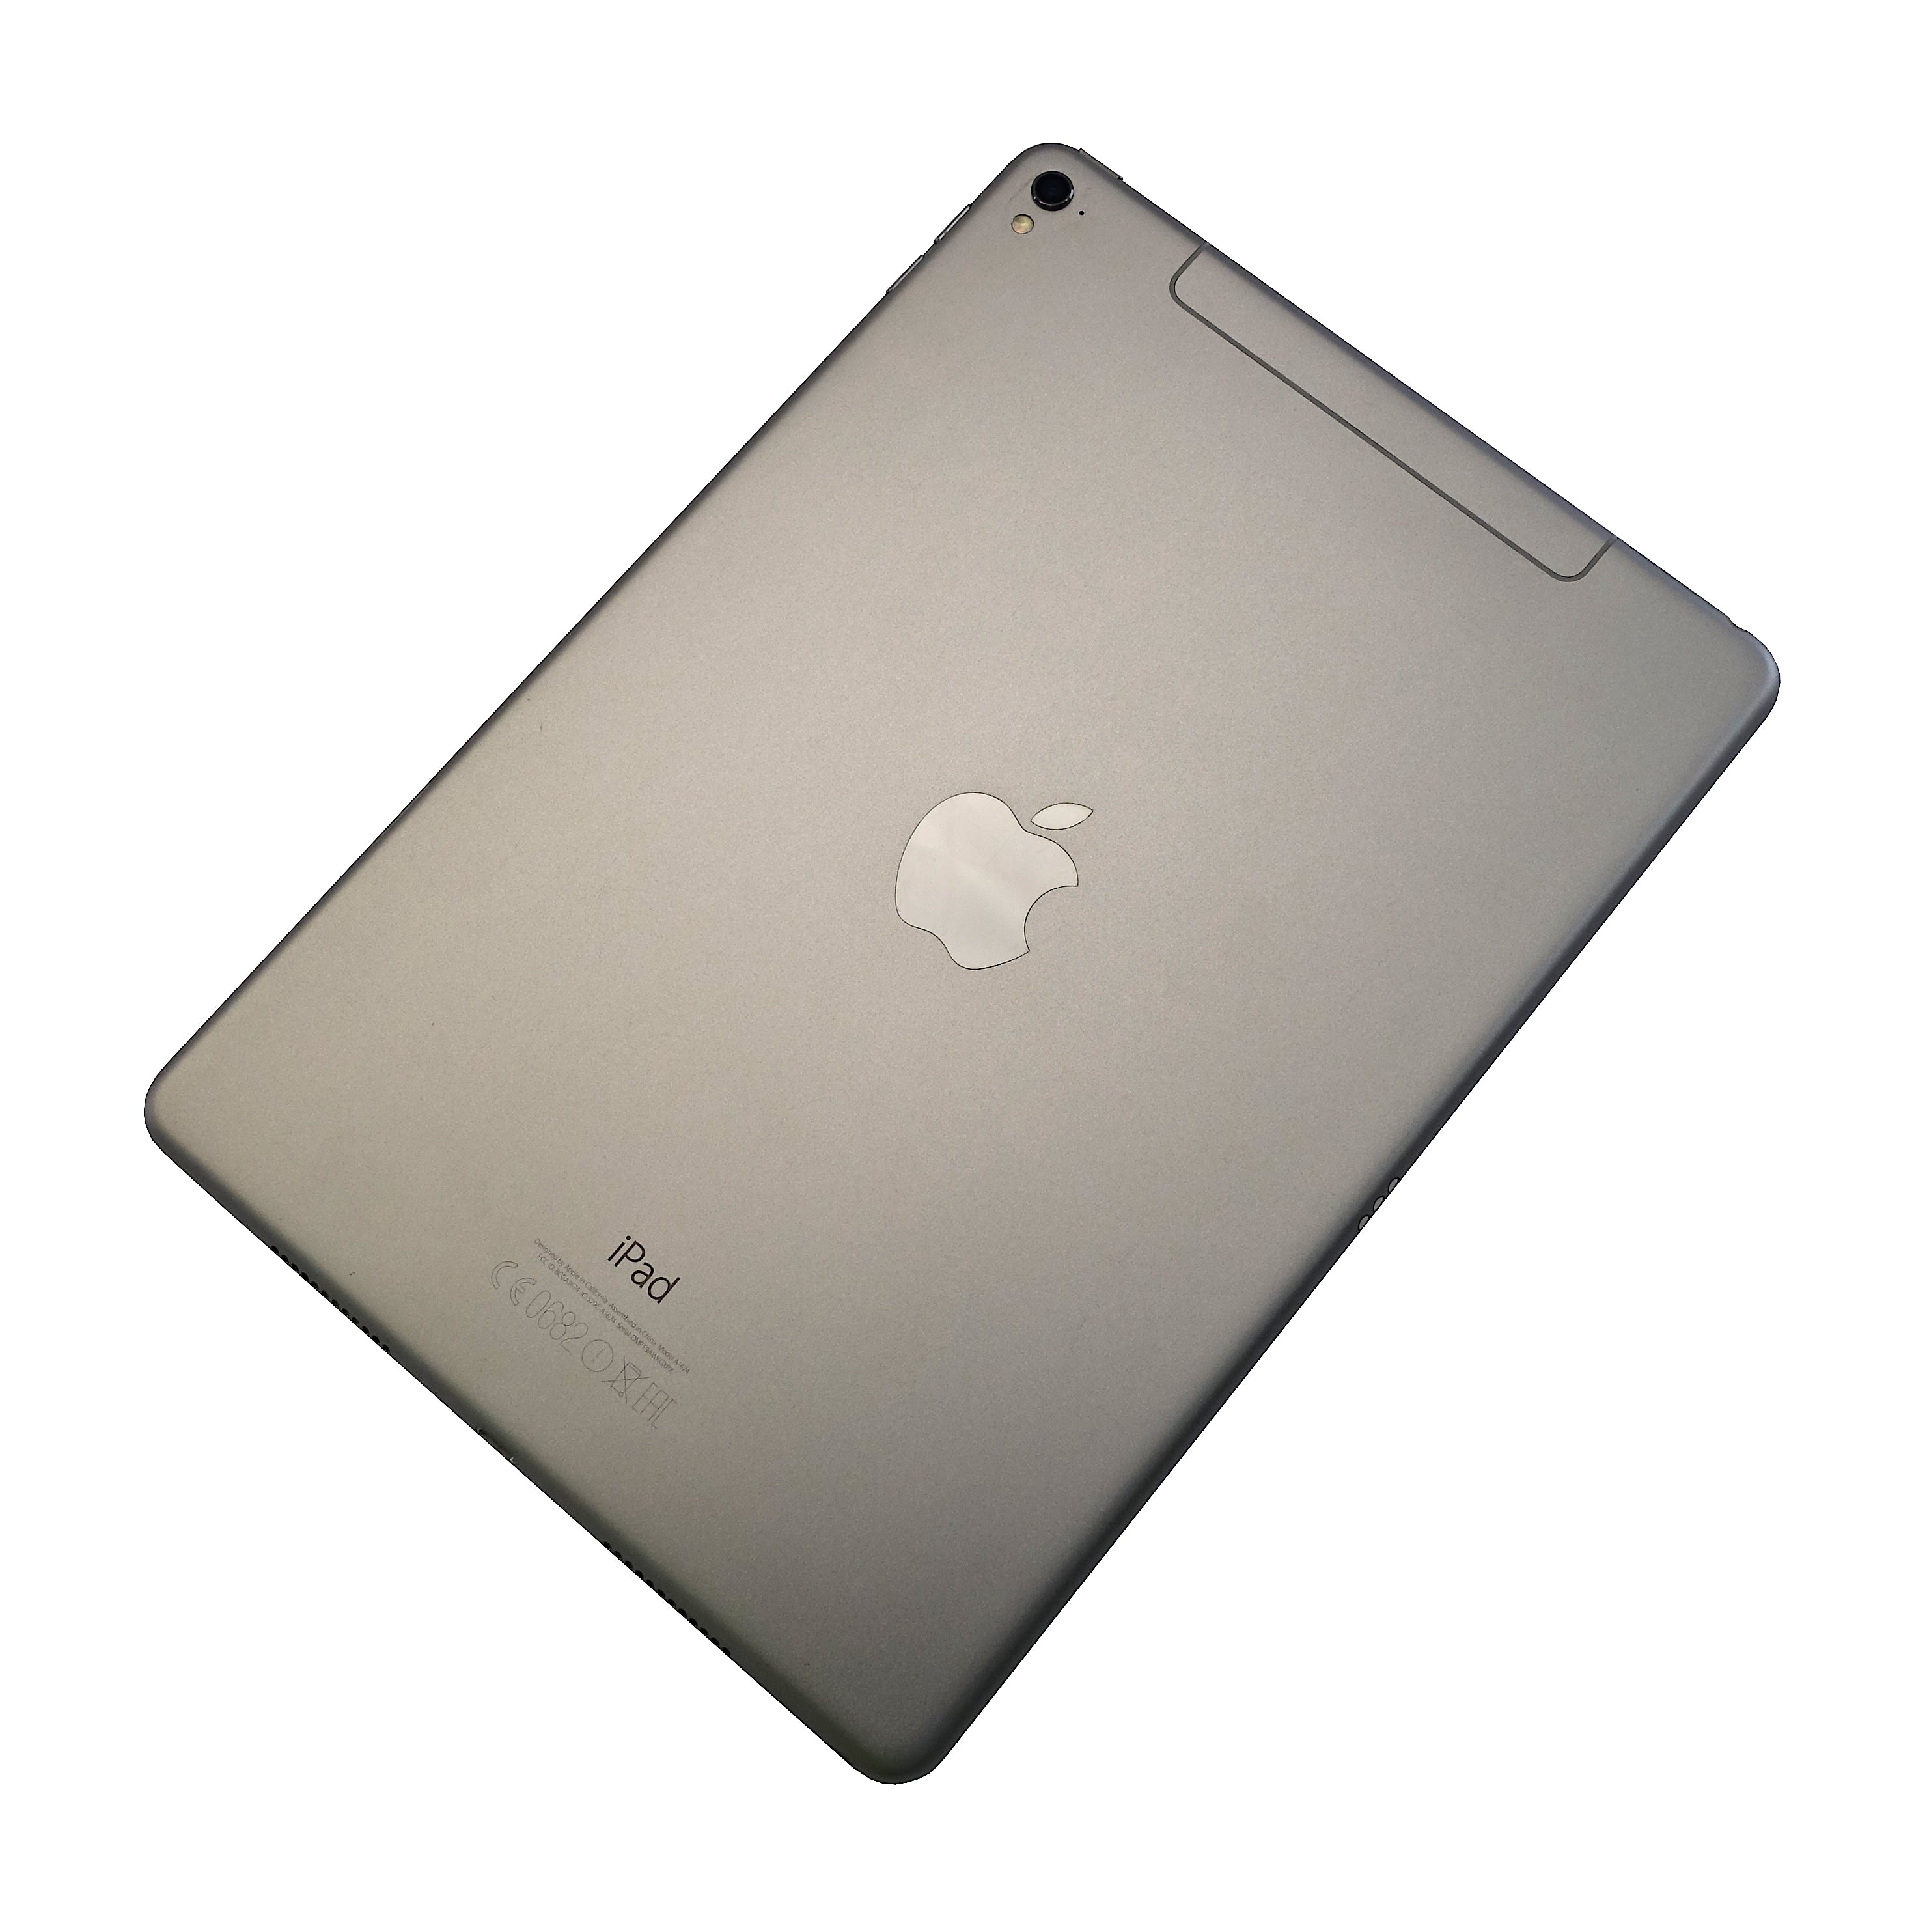 Apple iPad Pro 9.7" Tablet, A1674, 32GB, WiFi + GSM, Silver